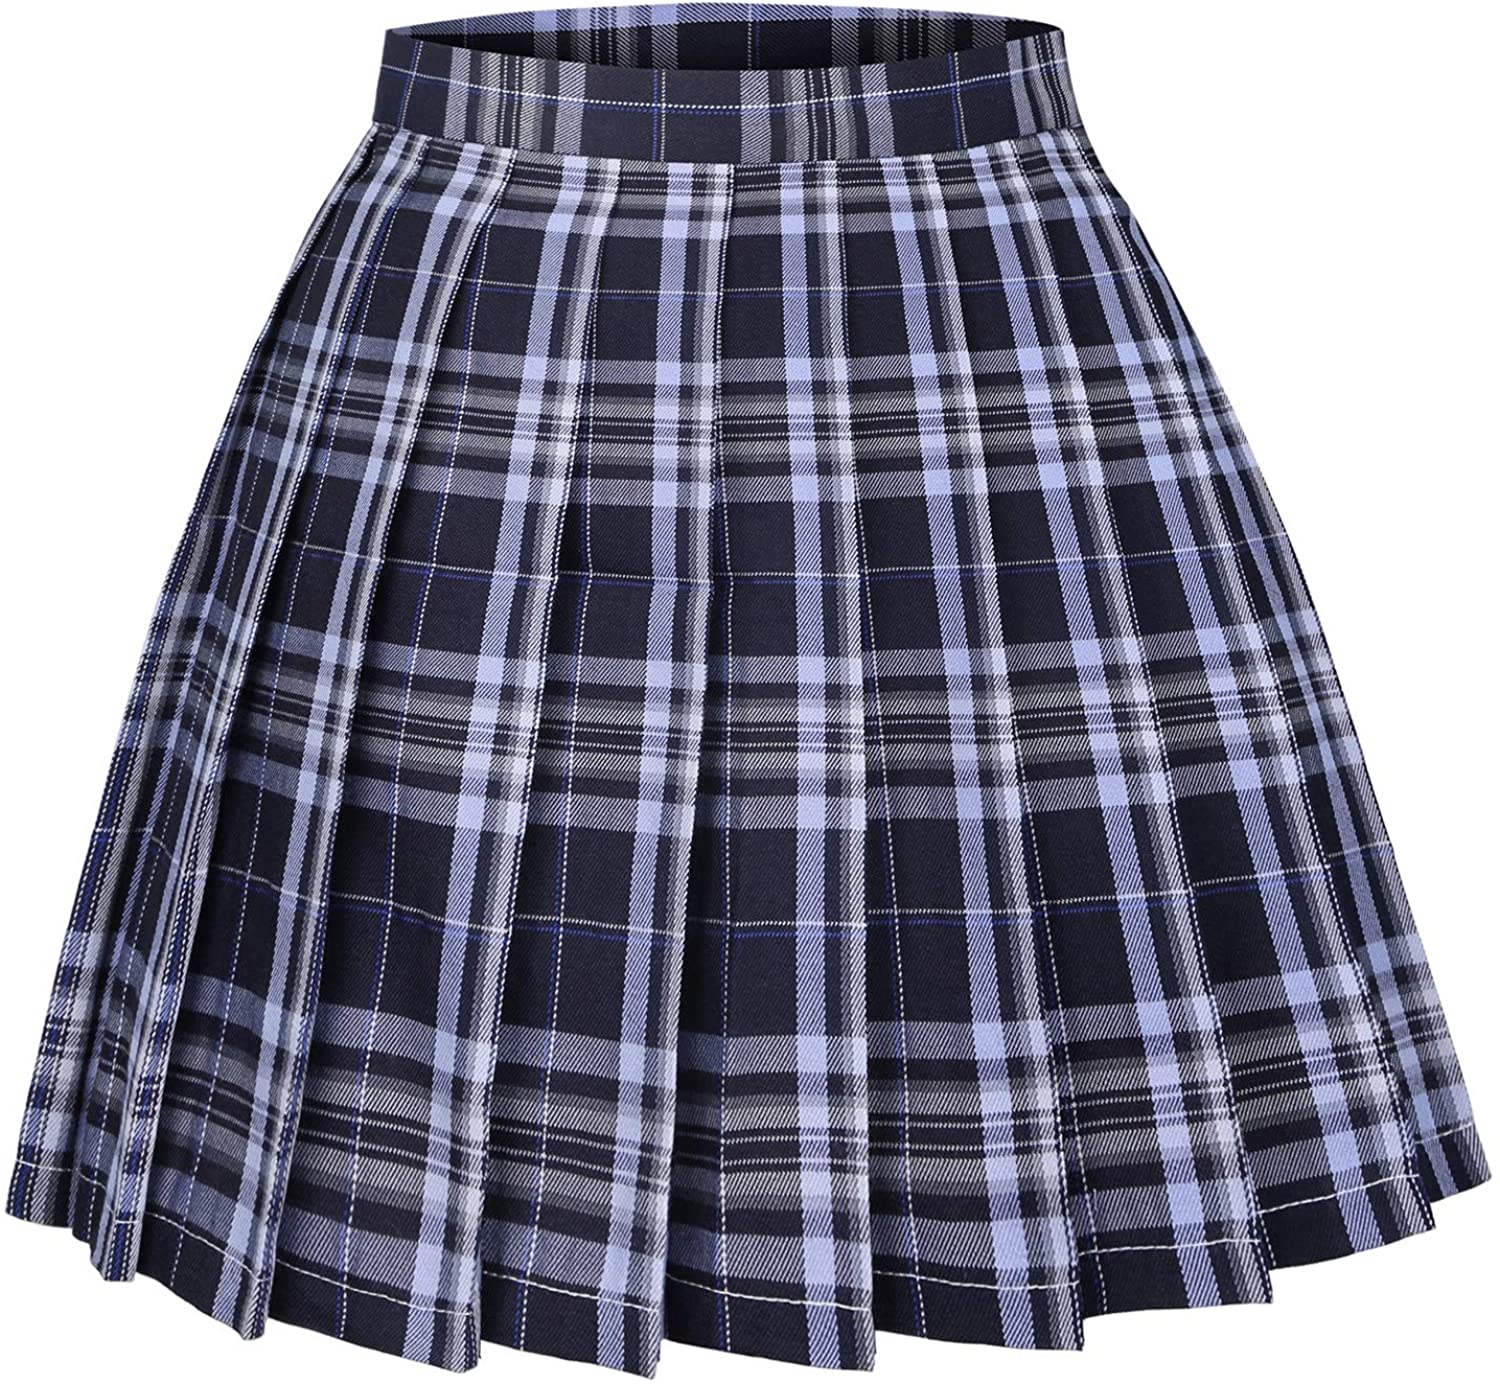 Seazoon Pleated Skirt, Black with White Stripe Cheer Skirt Mini